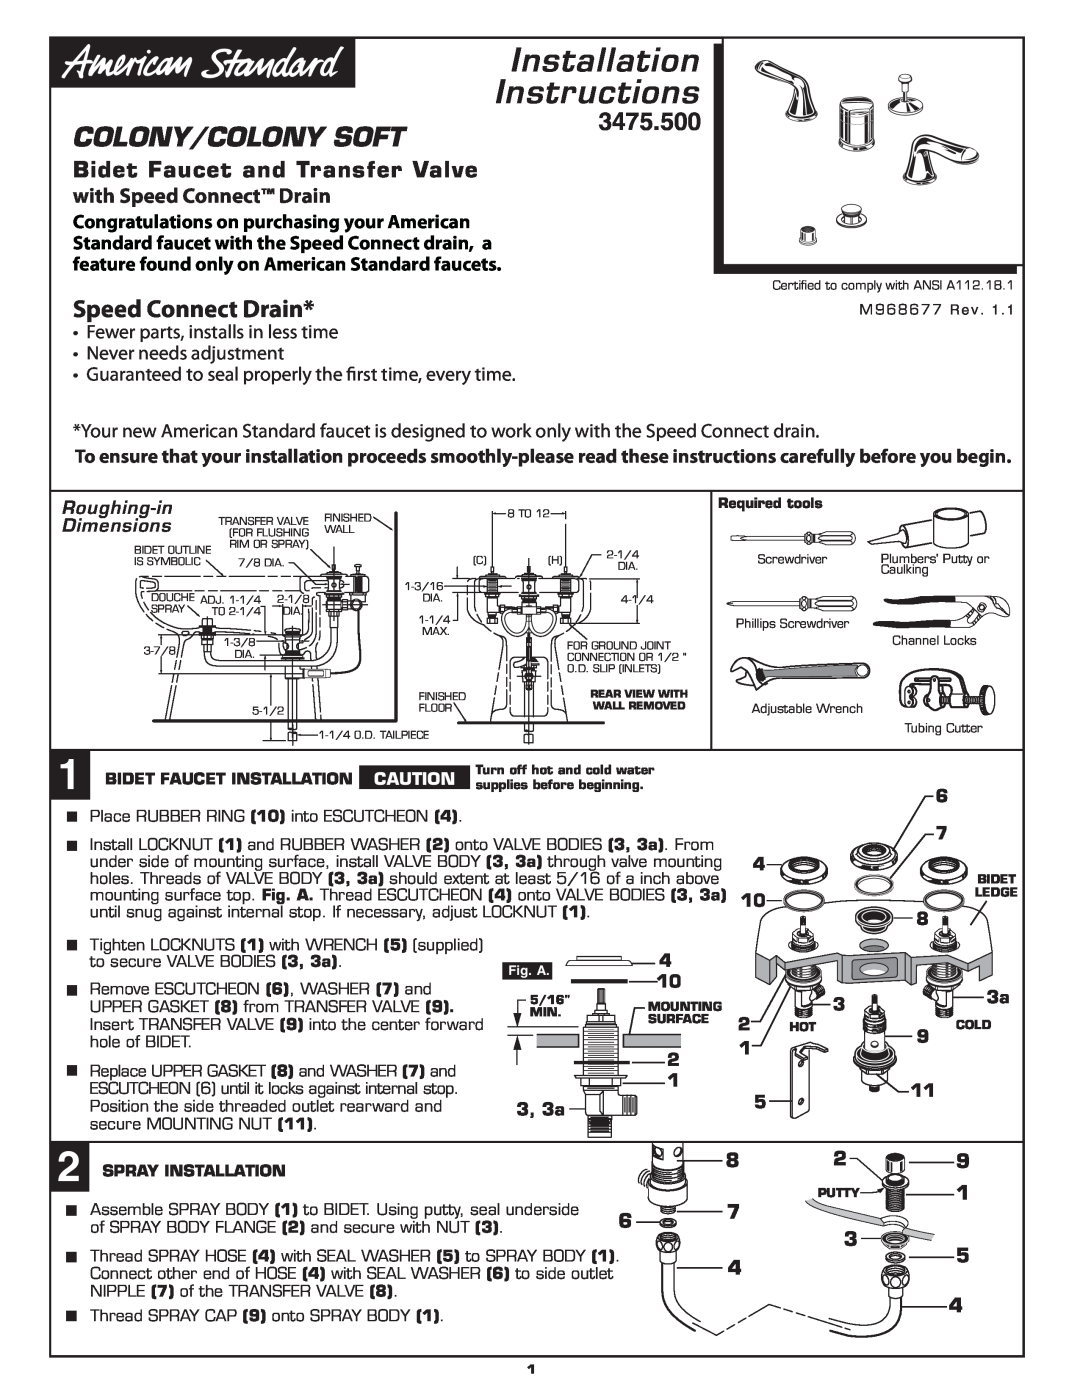 American Standard installation instructions Installation Instructions, 3475.500, Speed Connect Drain, Roughing-in 